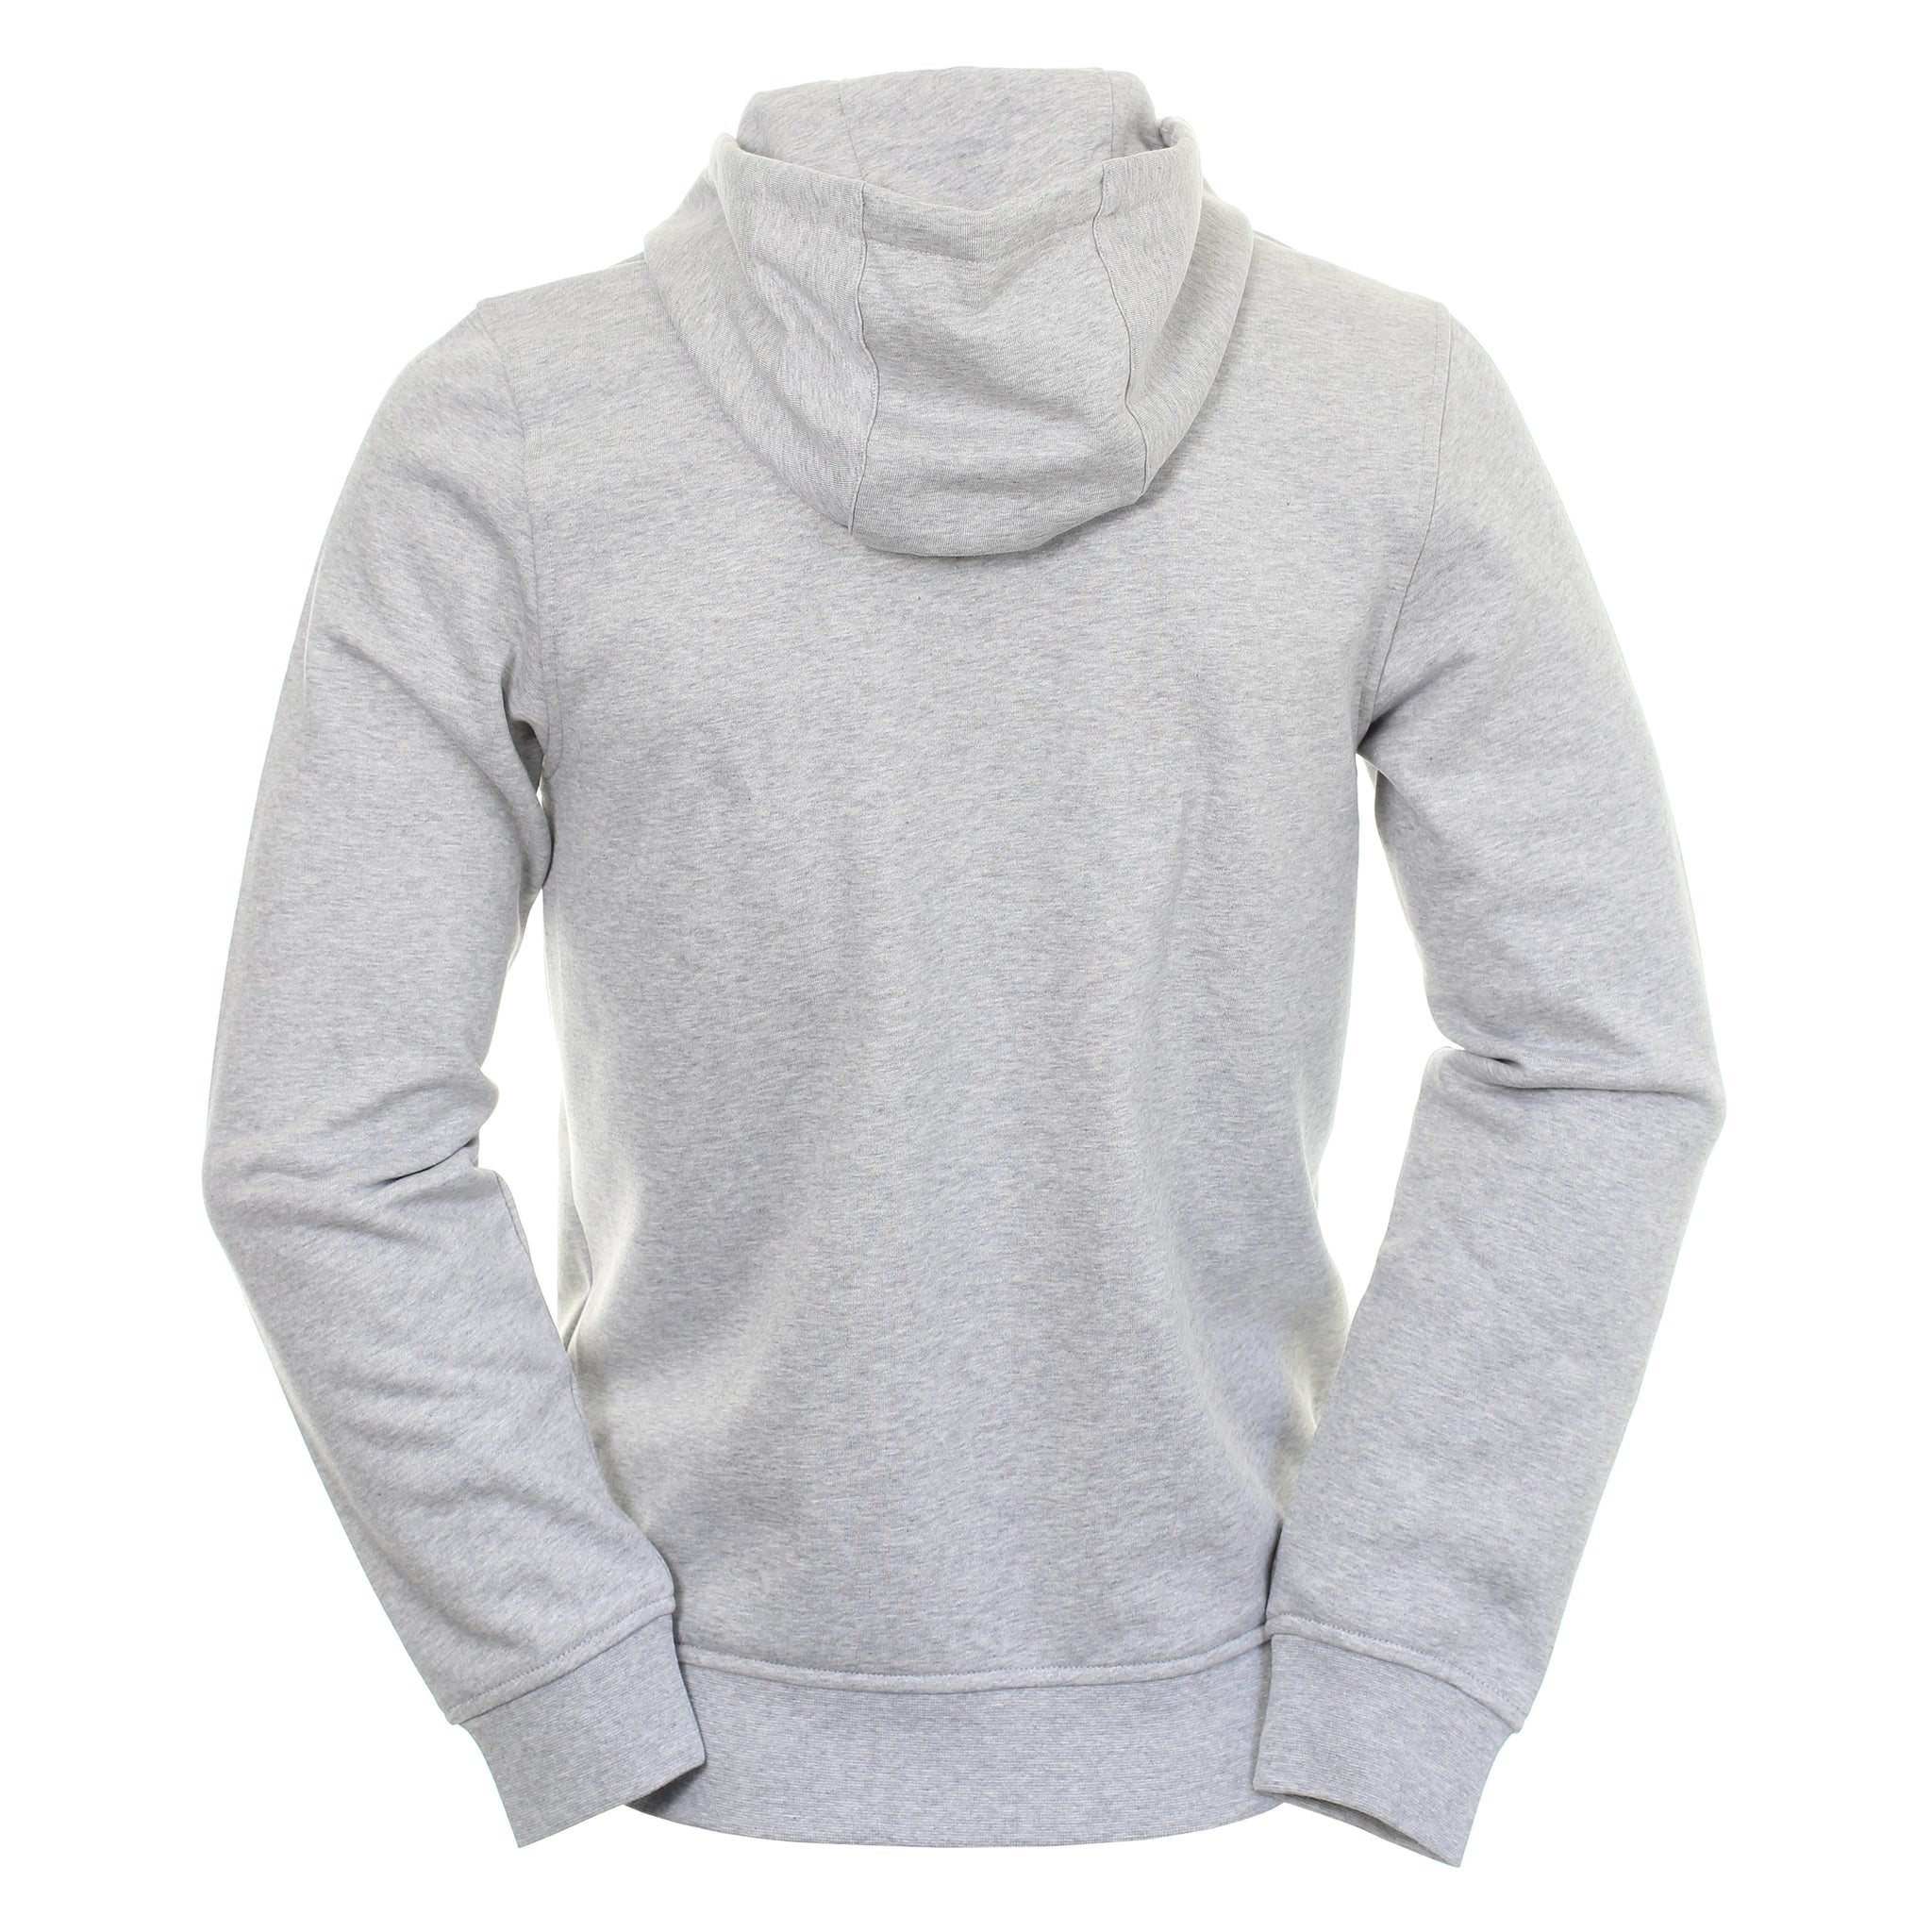 lacoste-sport-full-zip-hooded-sweatshirt-sh1551-grey-chine-9ya